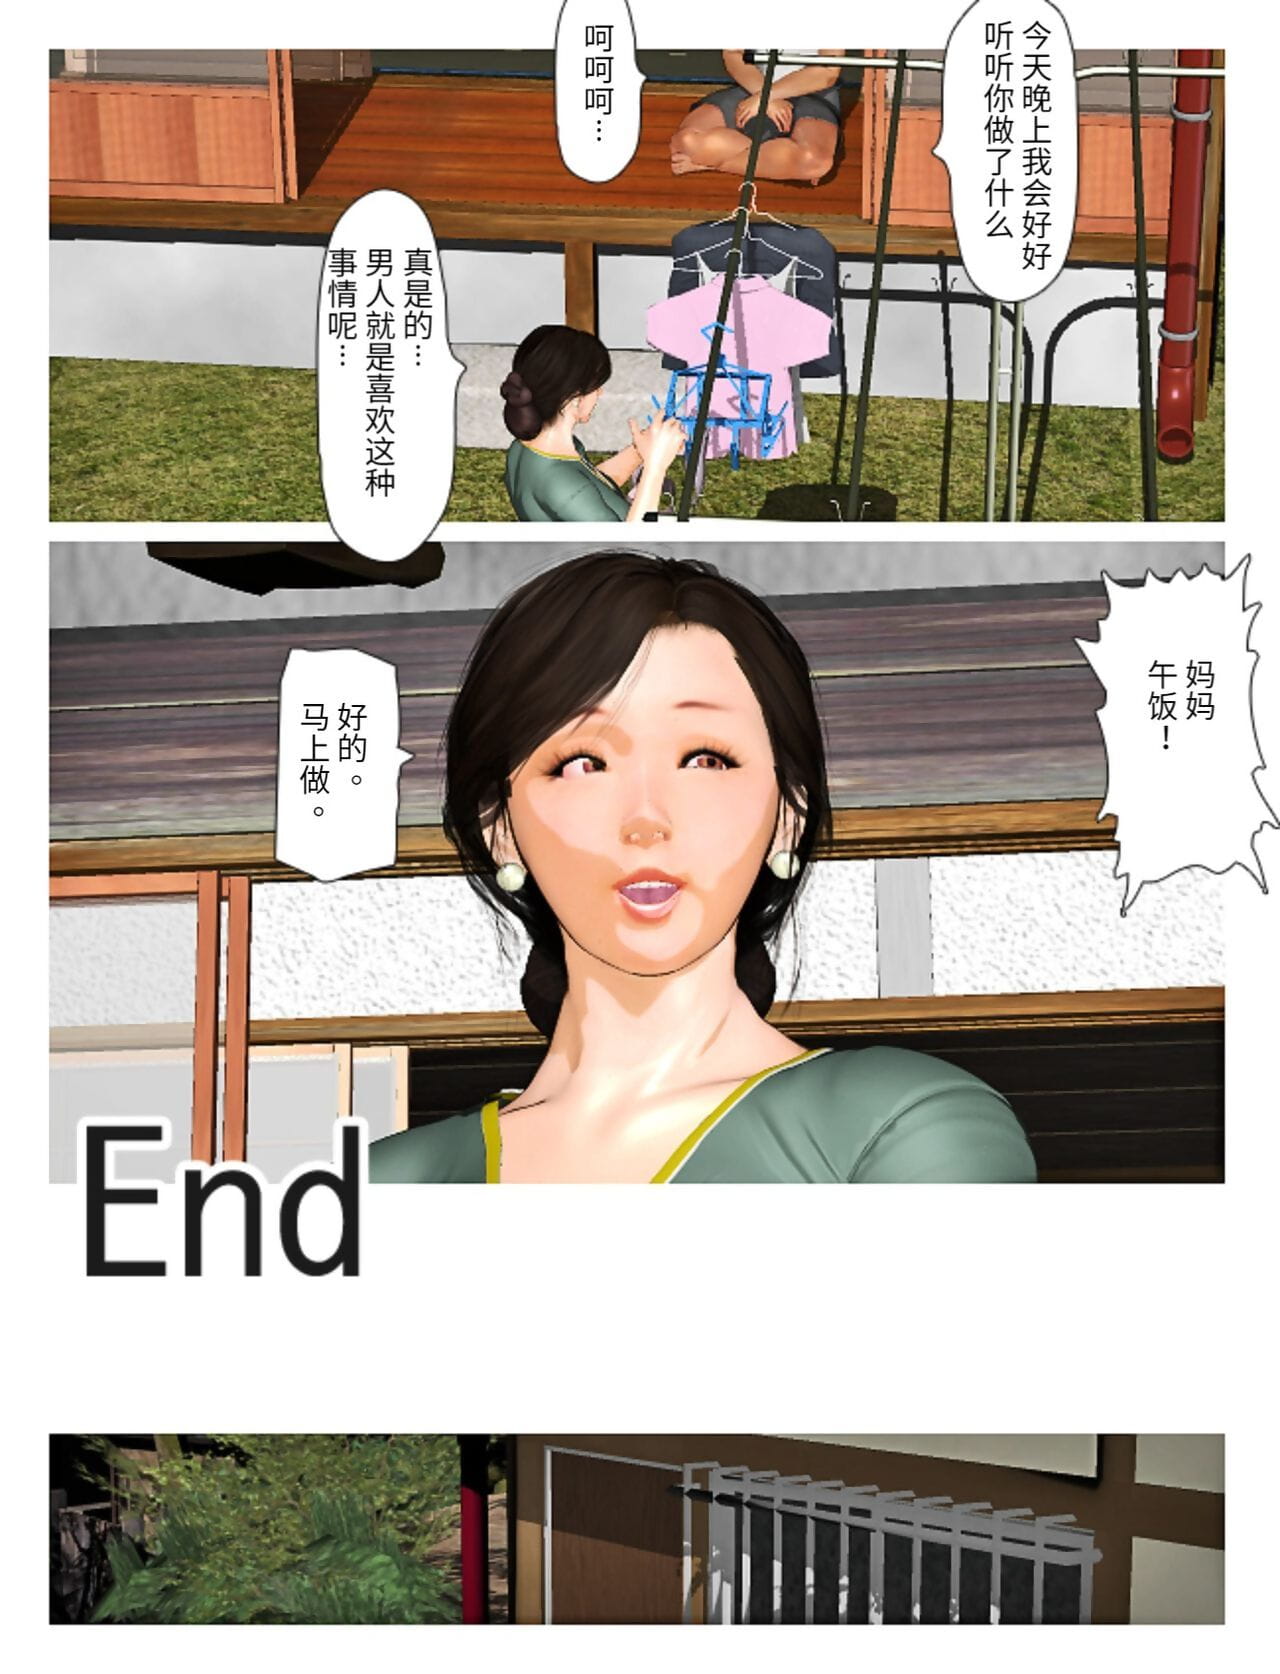 Kyou không misako san 2019:4 phần 5 page 1